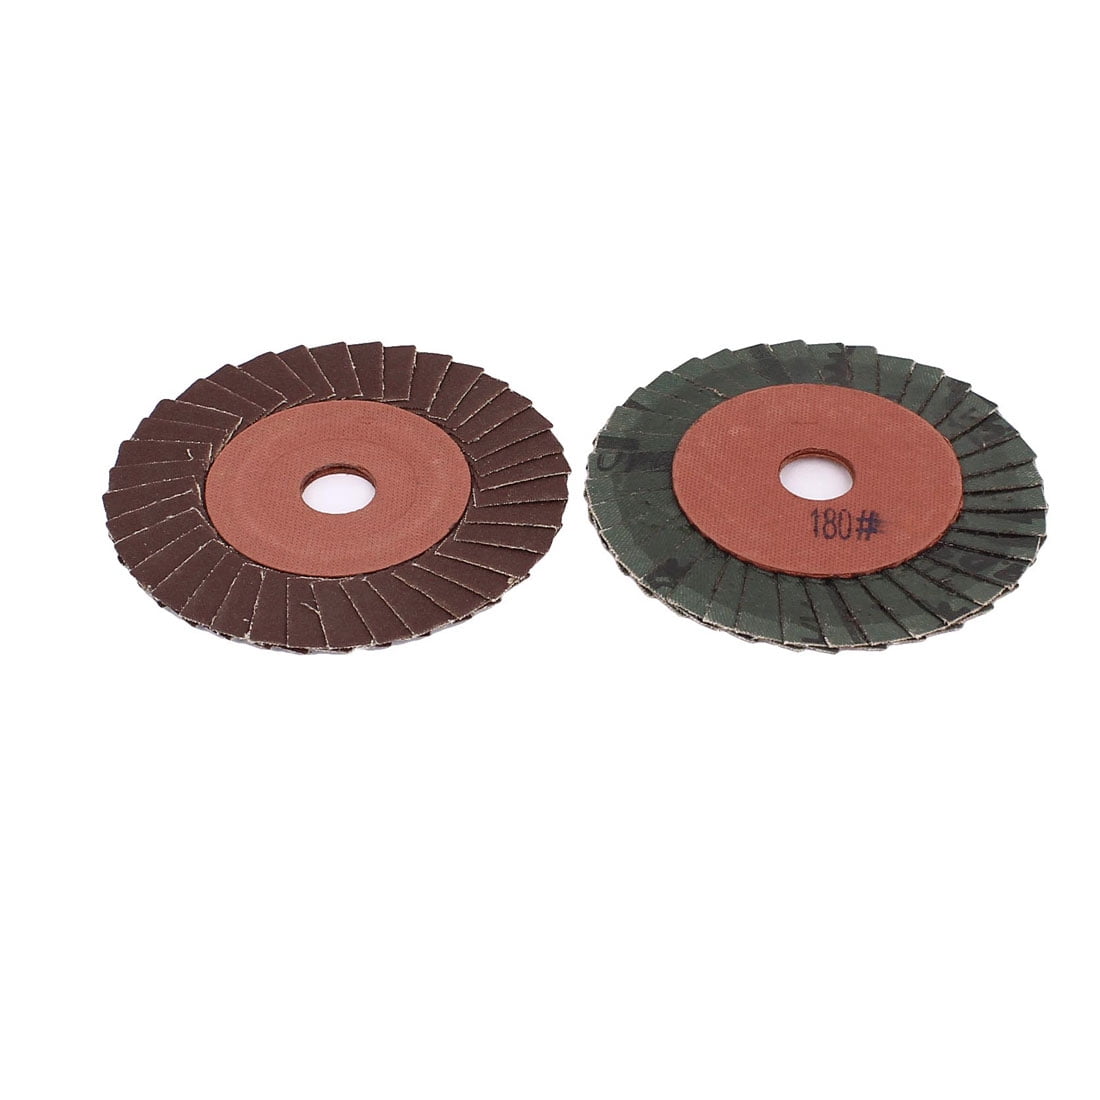 10 Goliath Industrial 4" Flap Discs 40 Grit FD440 Angle Grinder Sanding Wheels for sale online 